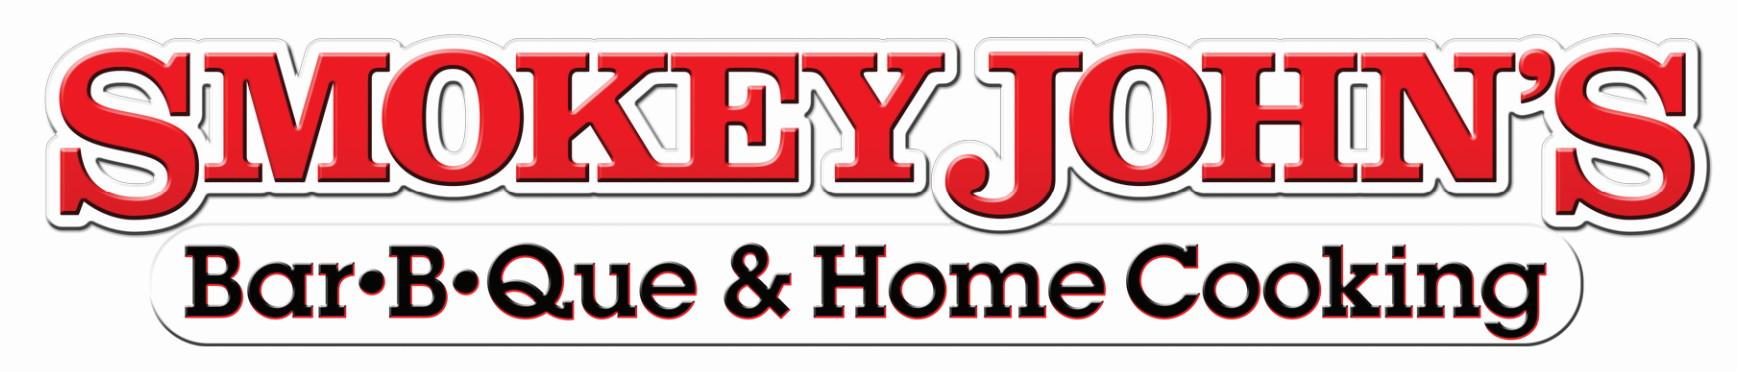 Smokey John's logo